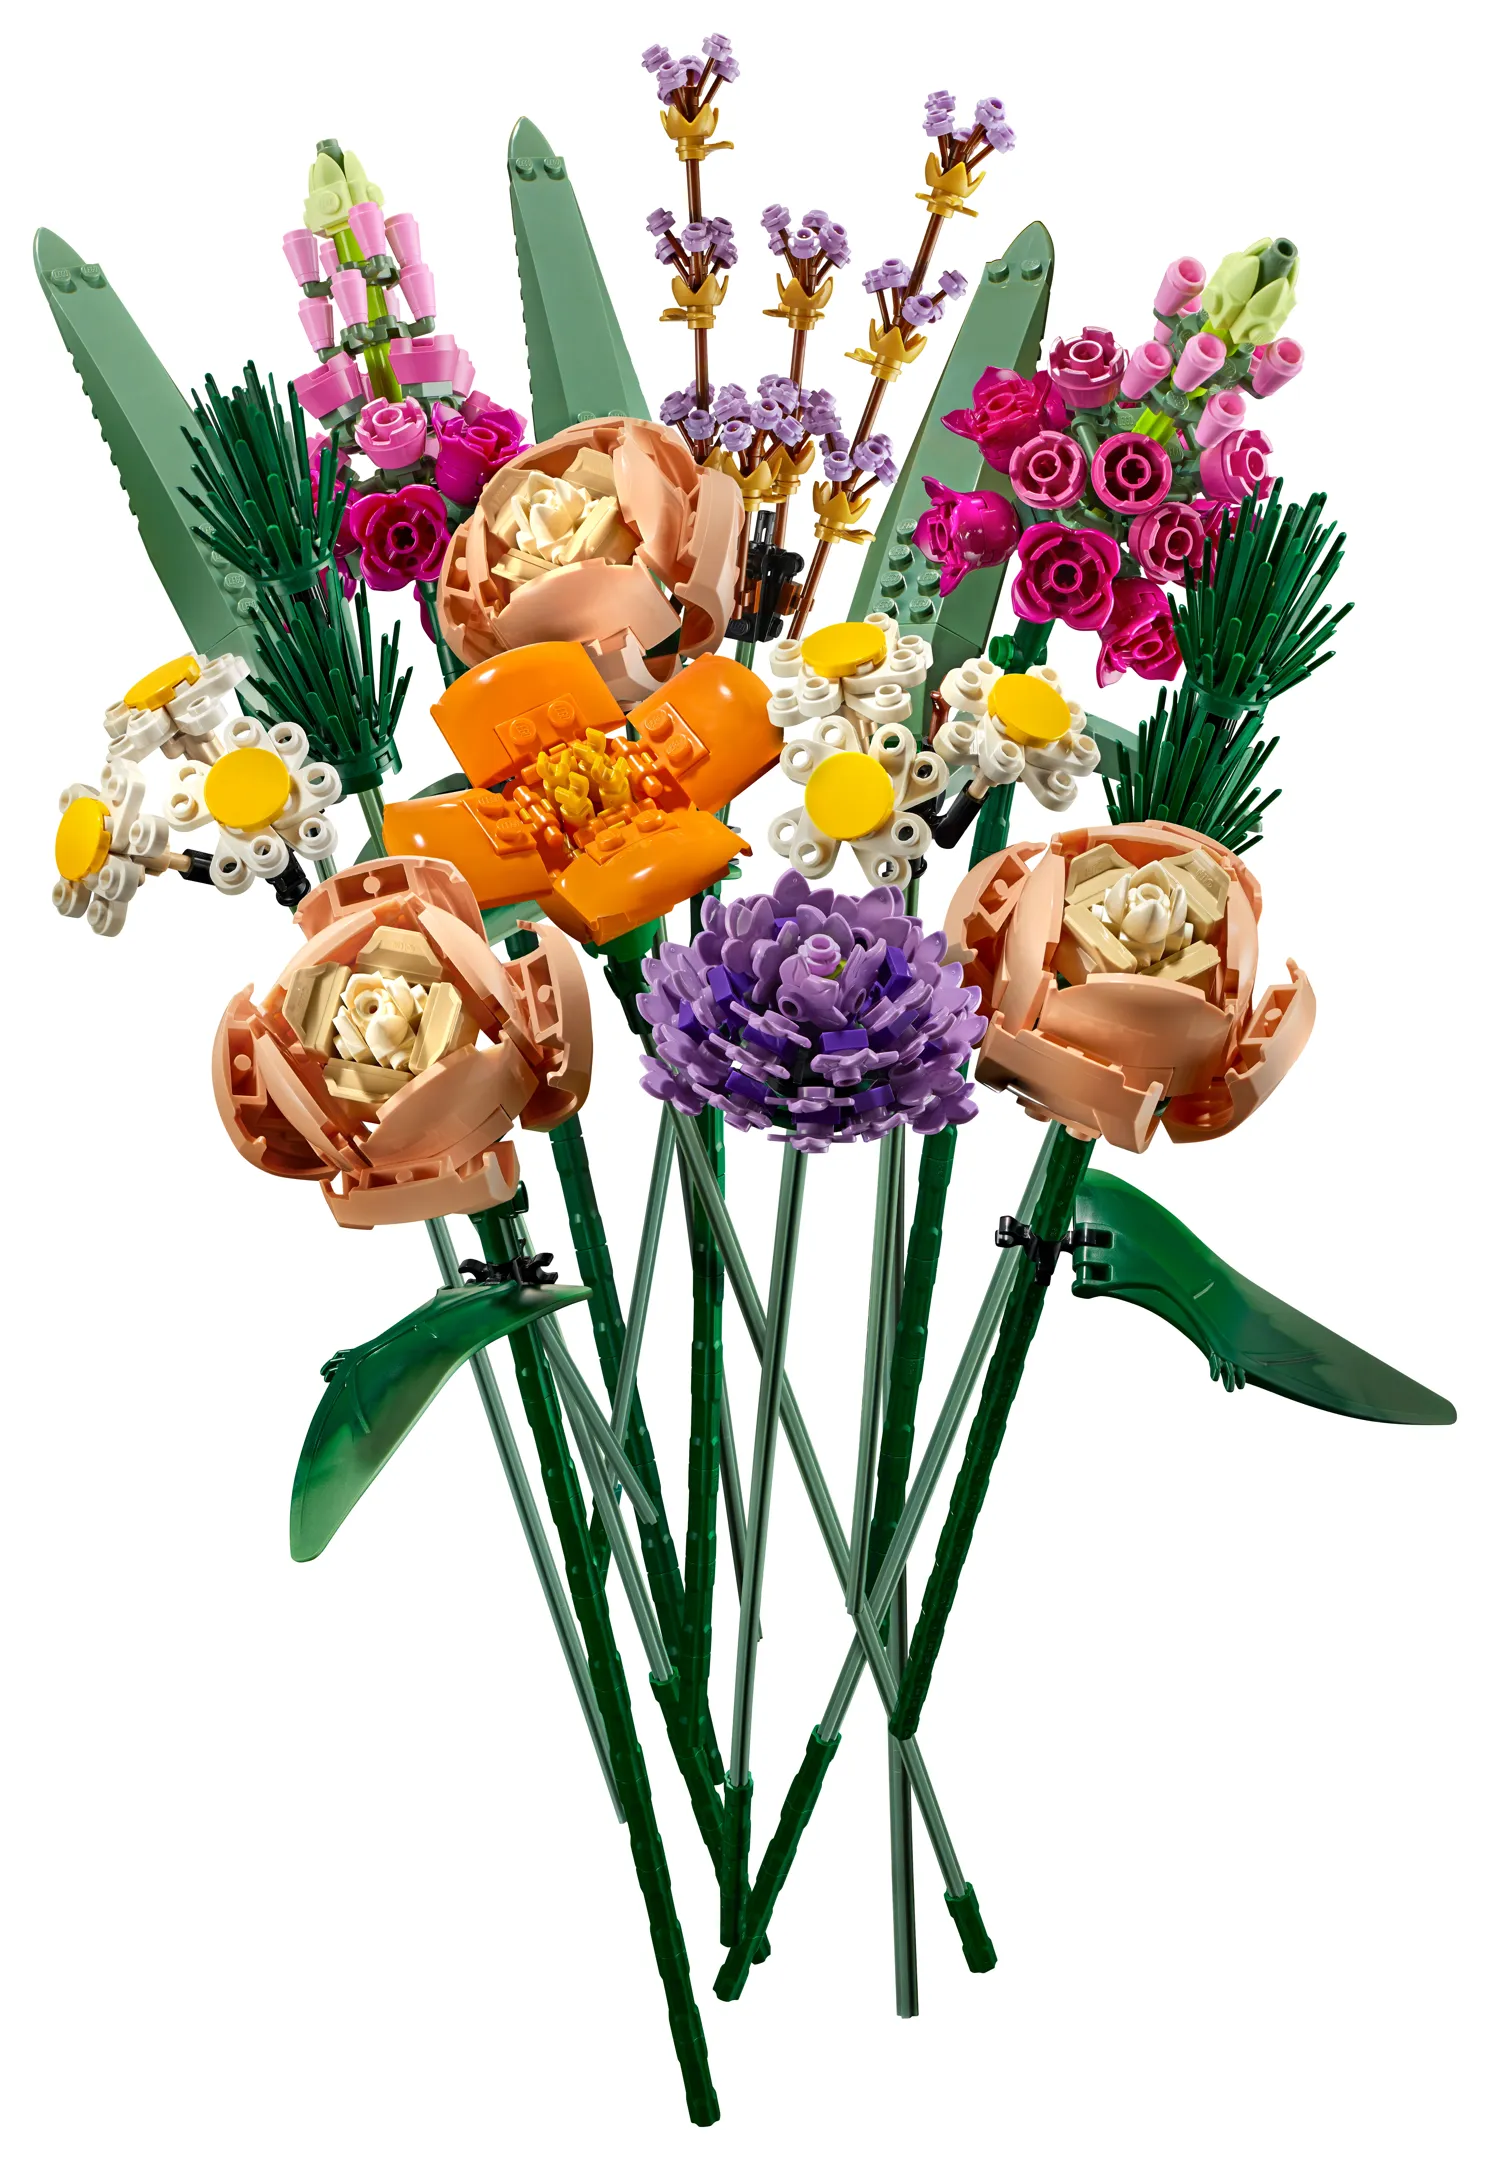 LEGO Icons Botanical Collection Flower Bouquet • Set 10280